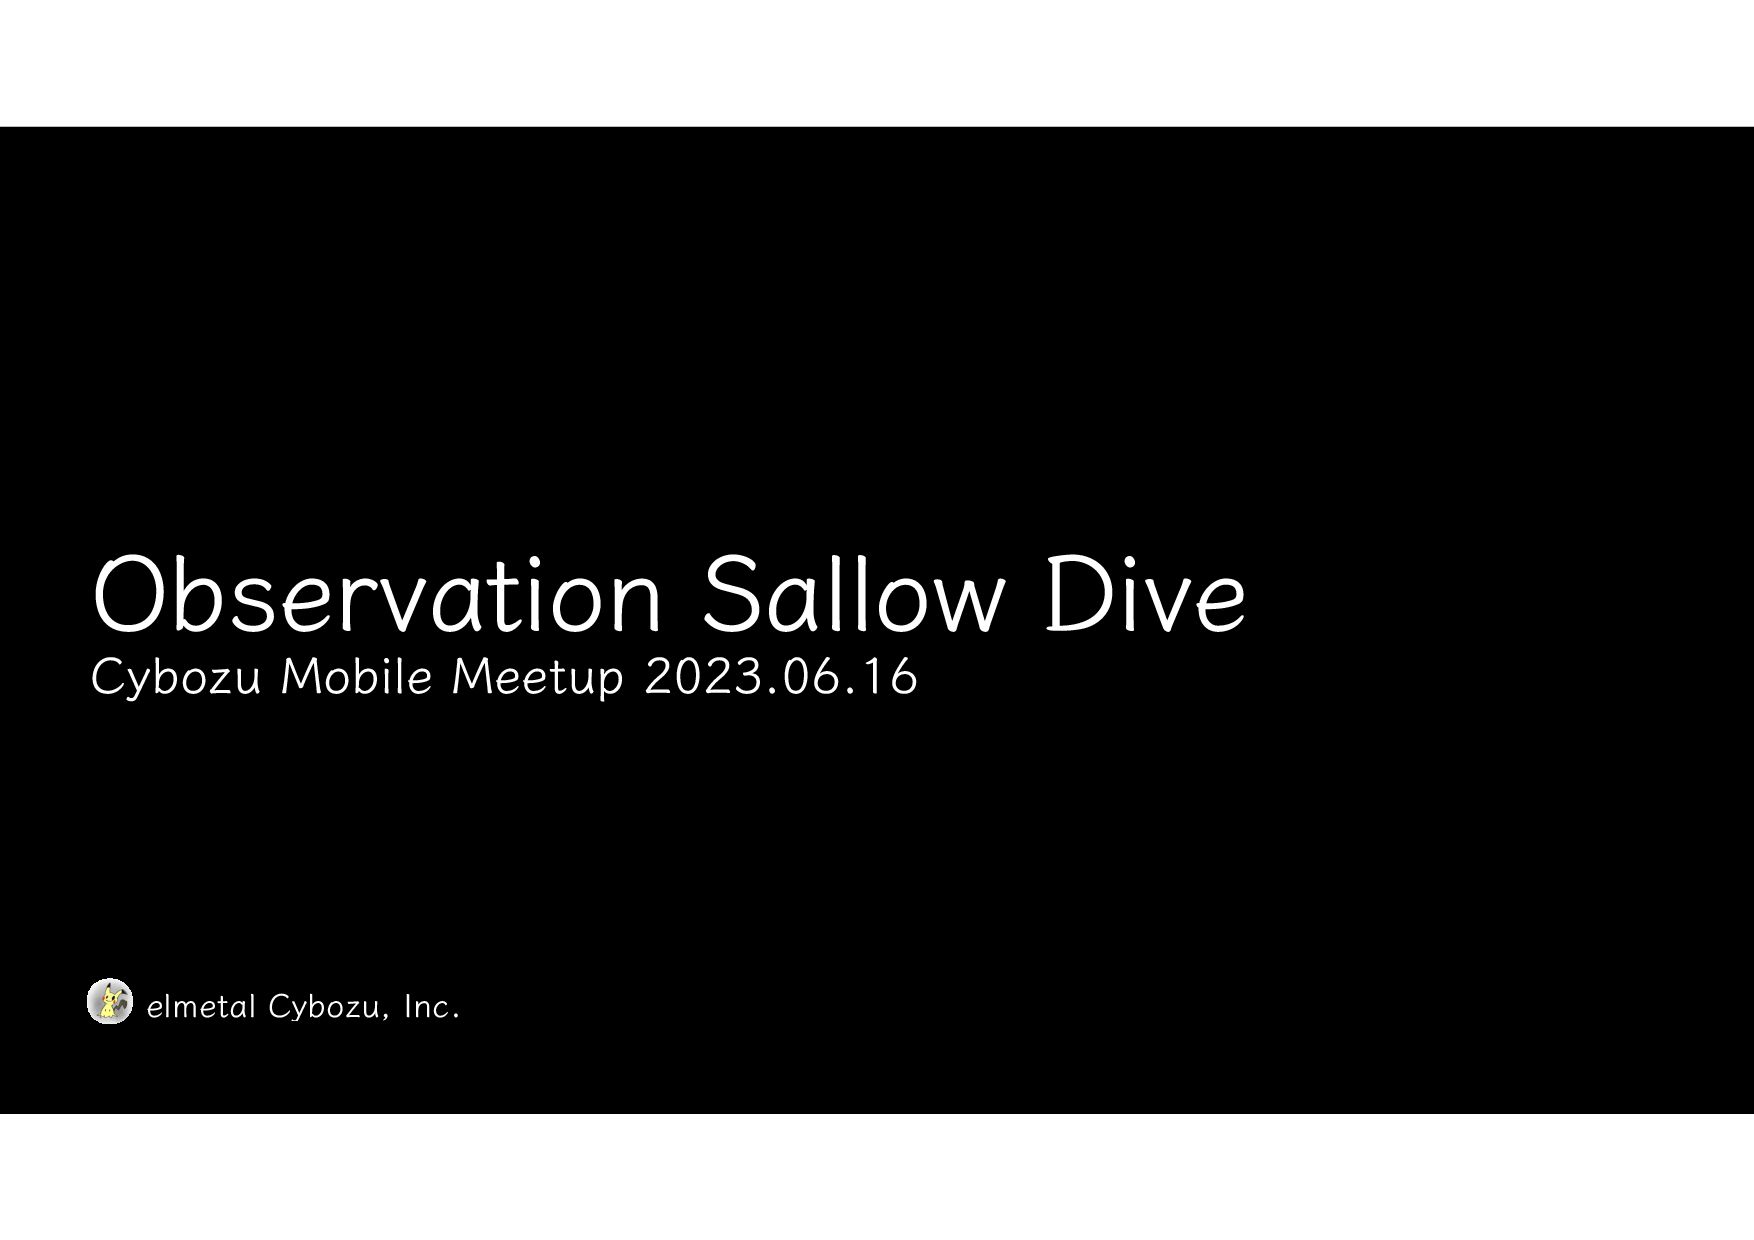 Slide Top: ObservationSallowDive